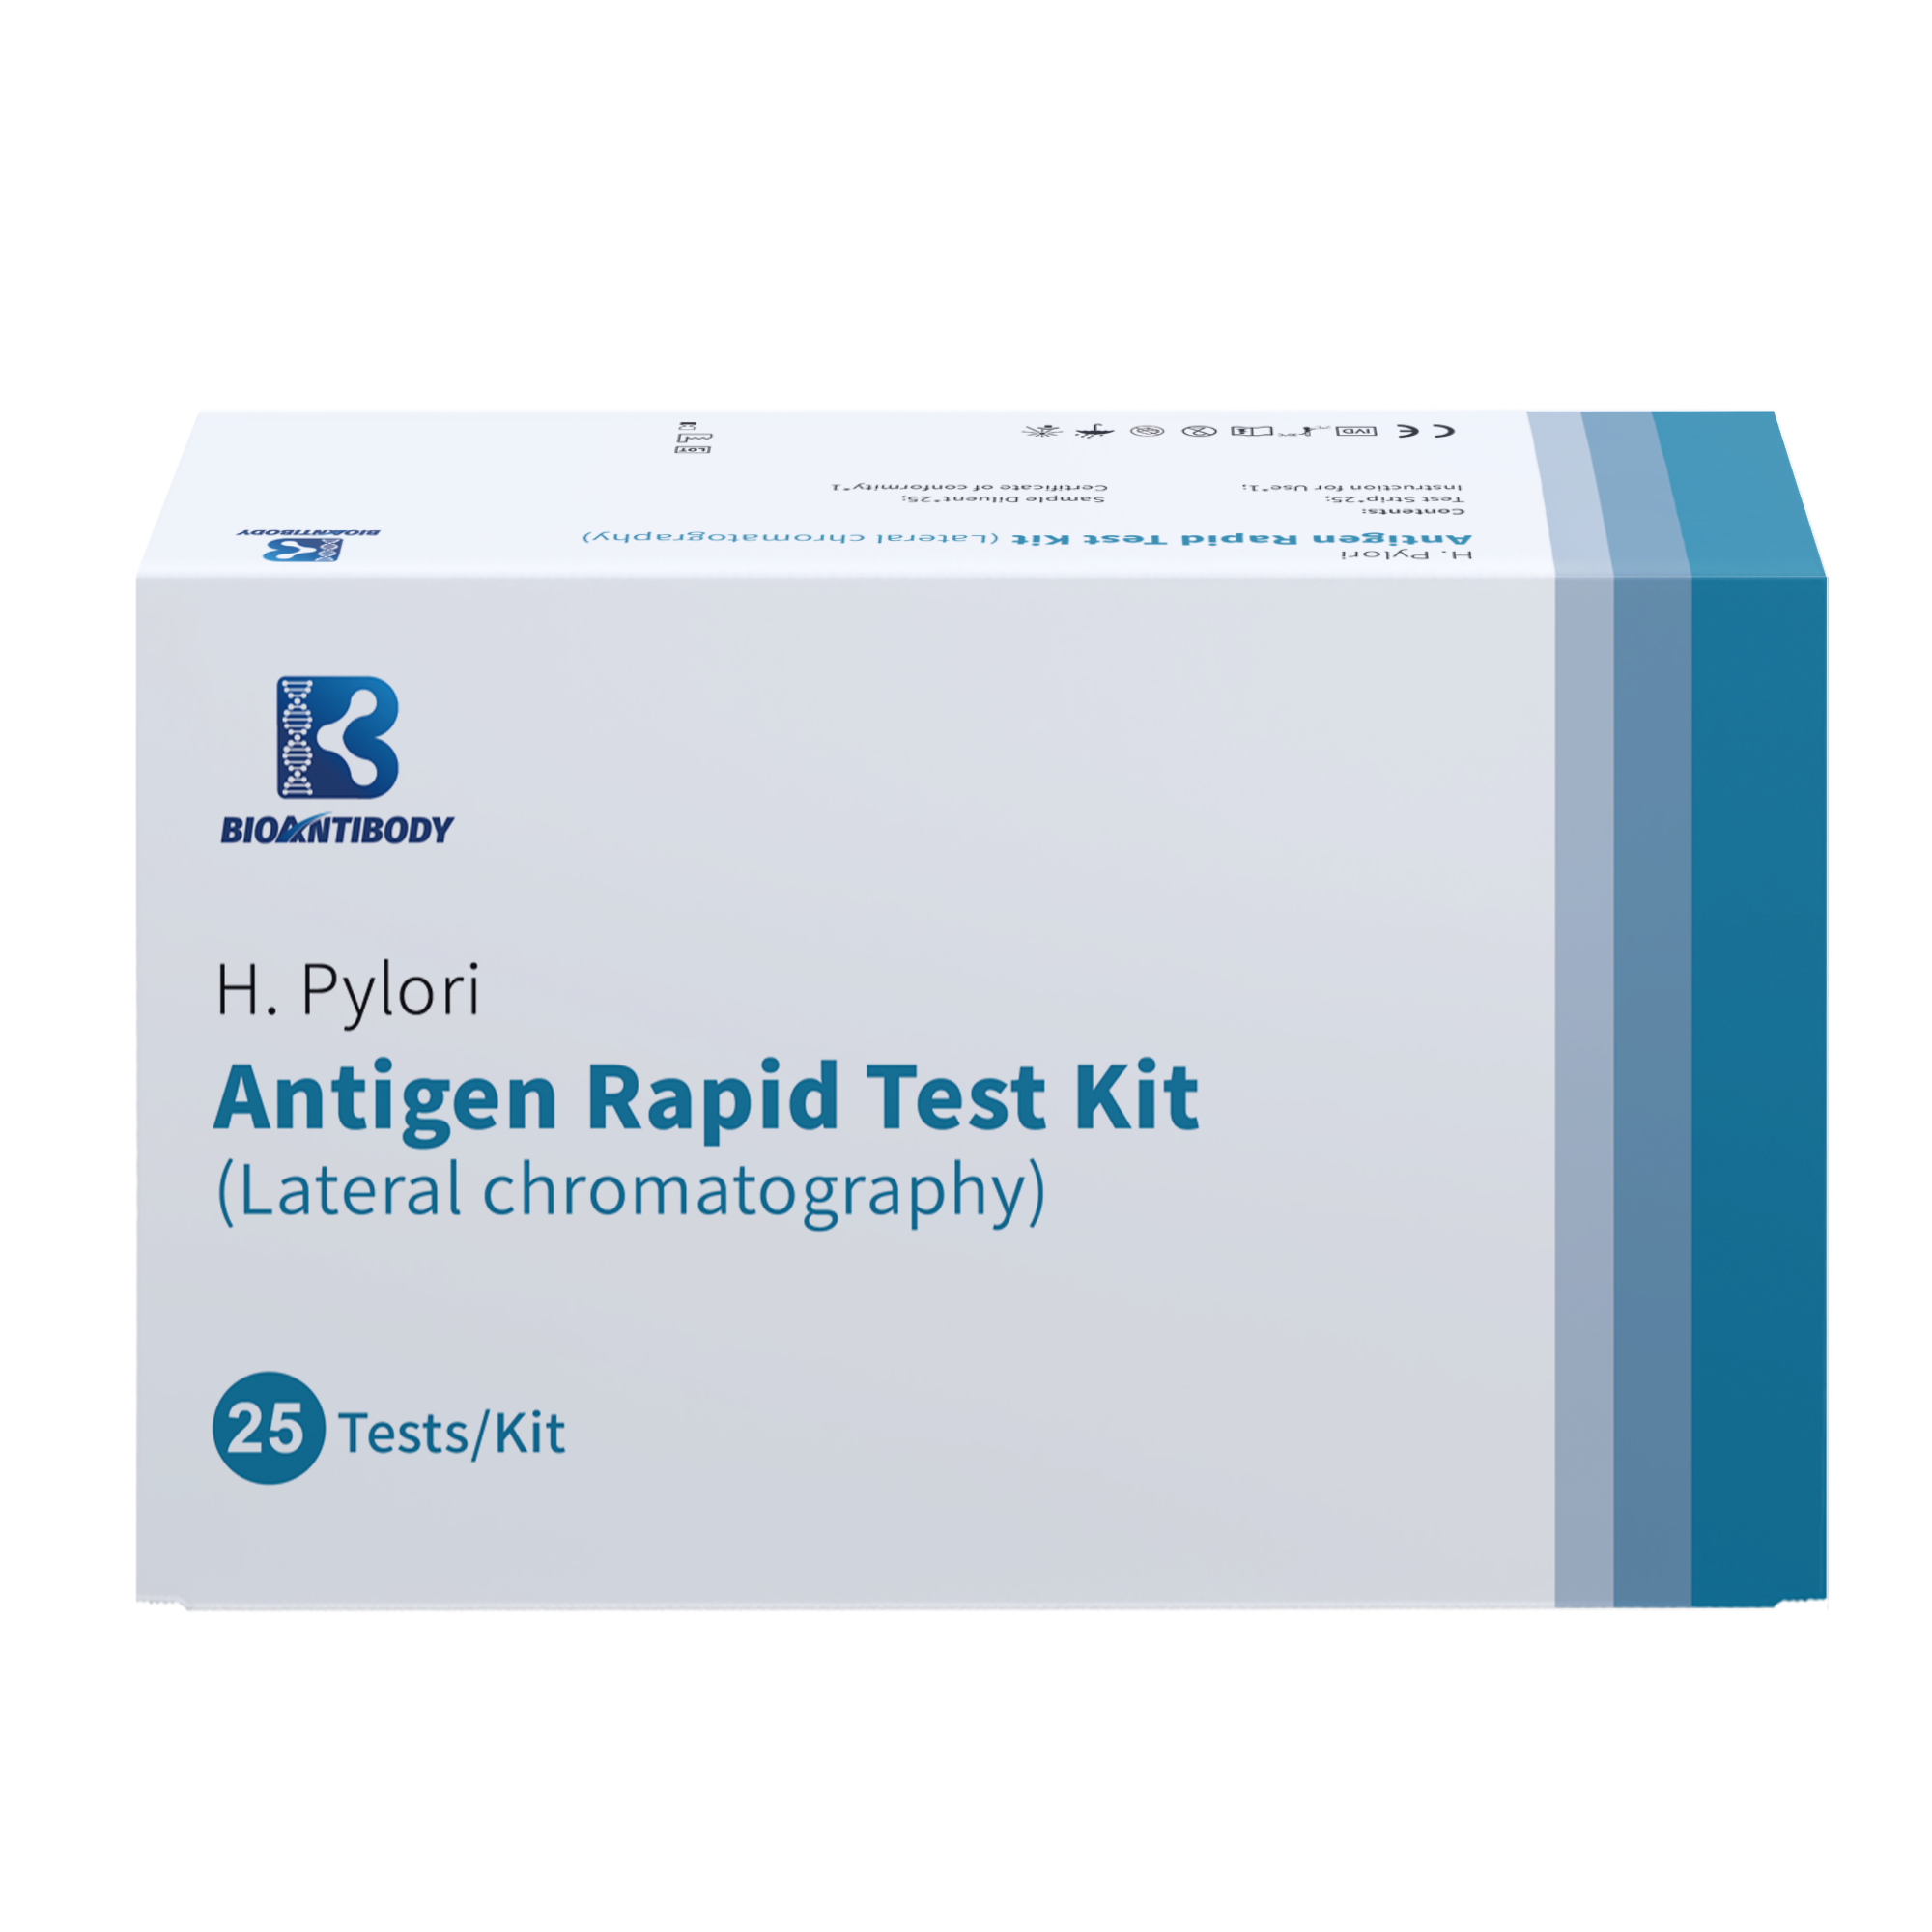 H. Pylori Antigen Test azkar kit (Alboko kromatografia)